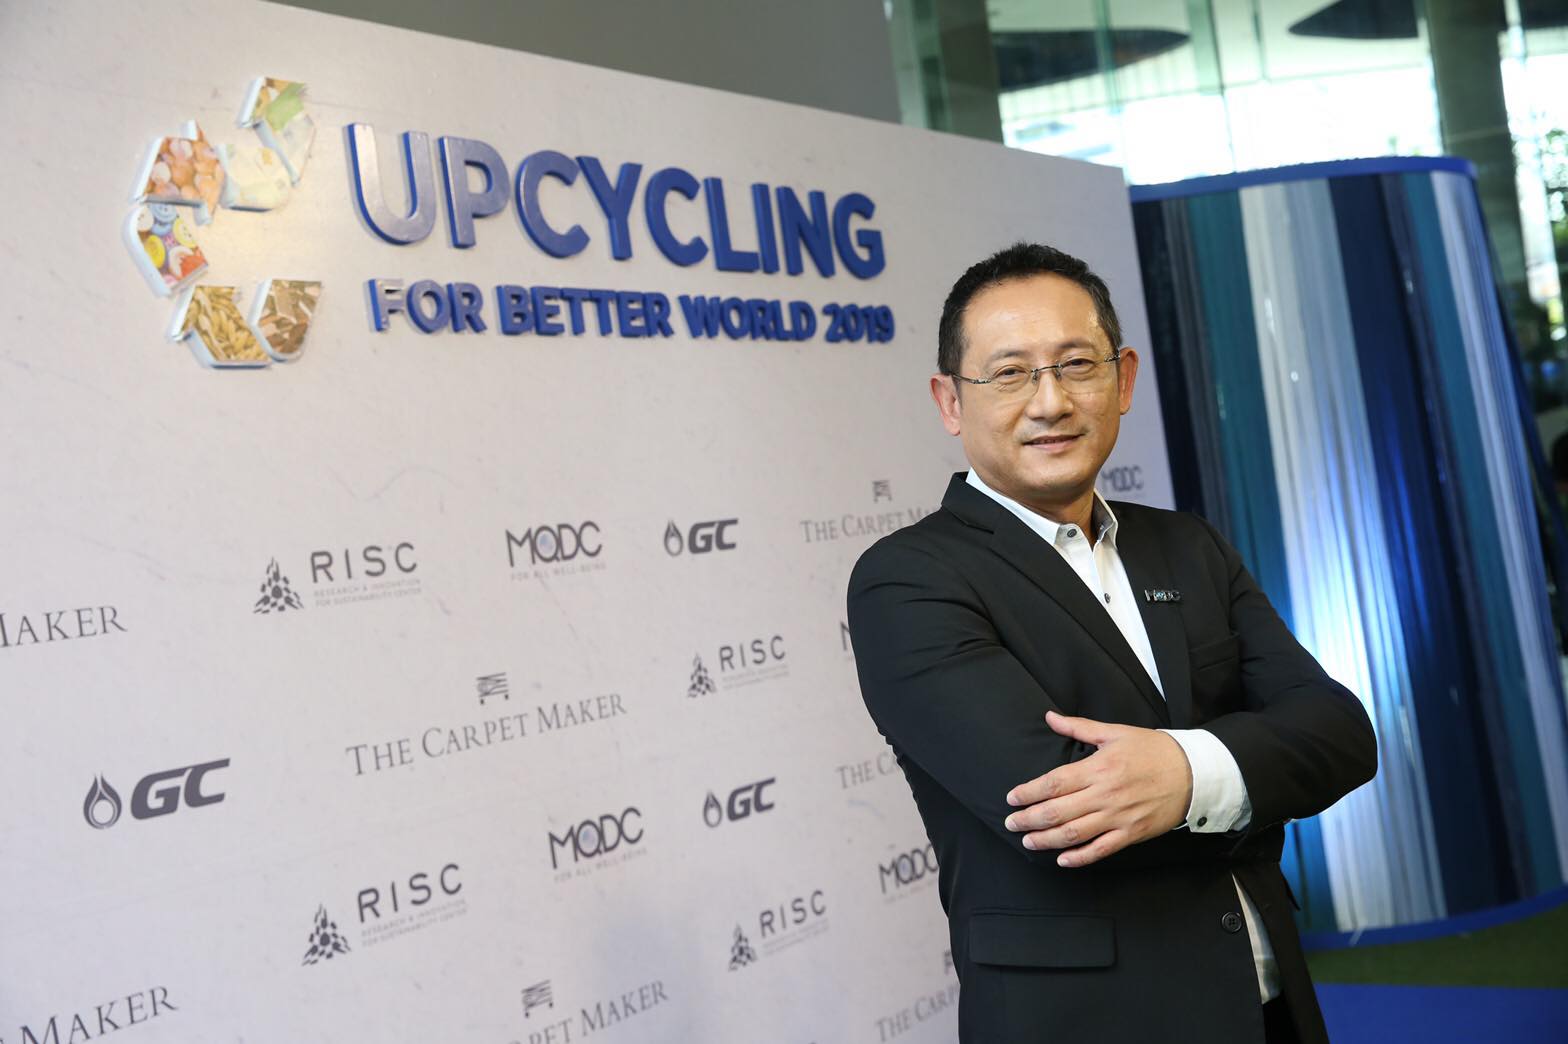 RISC ผนึกกำลัง MQDC GC และ Carpet Maker จัดงาน UPCYCLING FOR A BETTER WORLD 2019 ตอกย้ำแนวคิด Sustainnovation